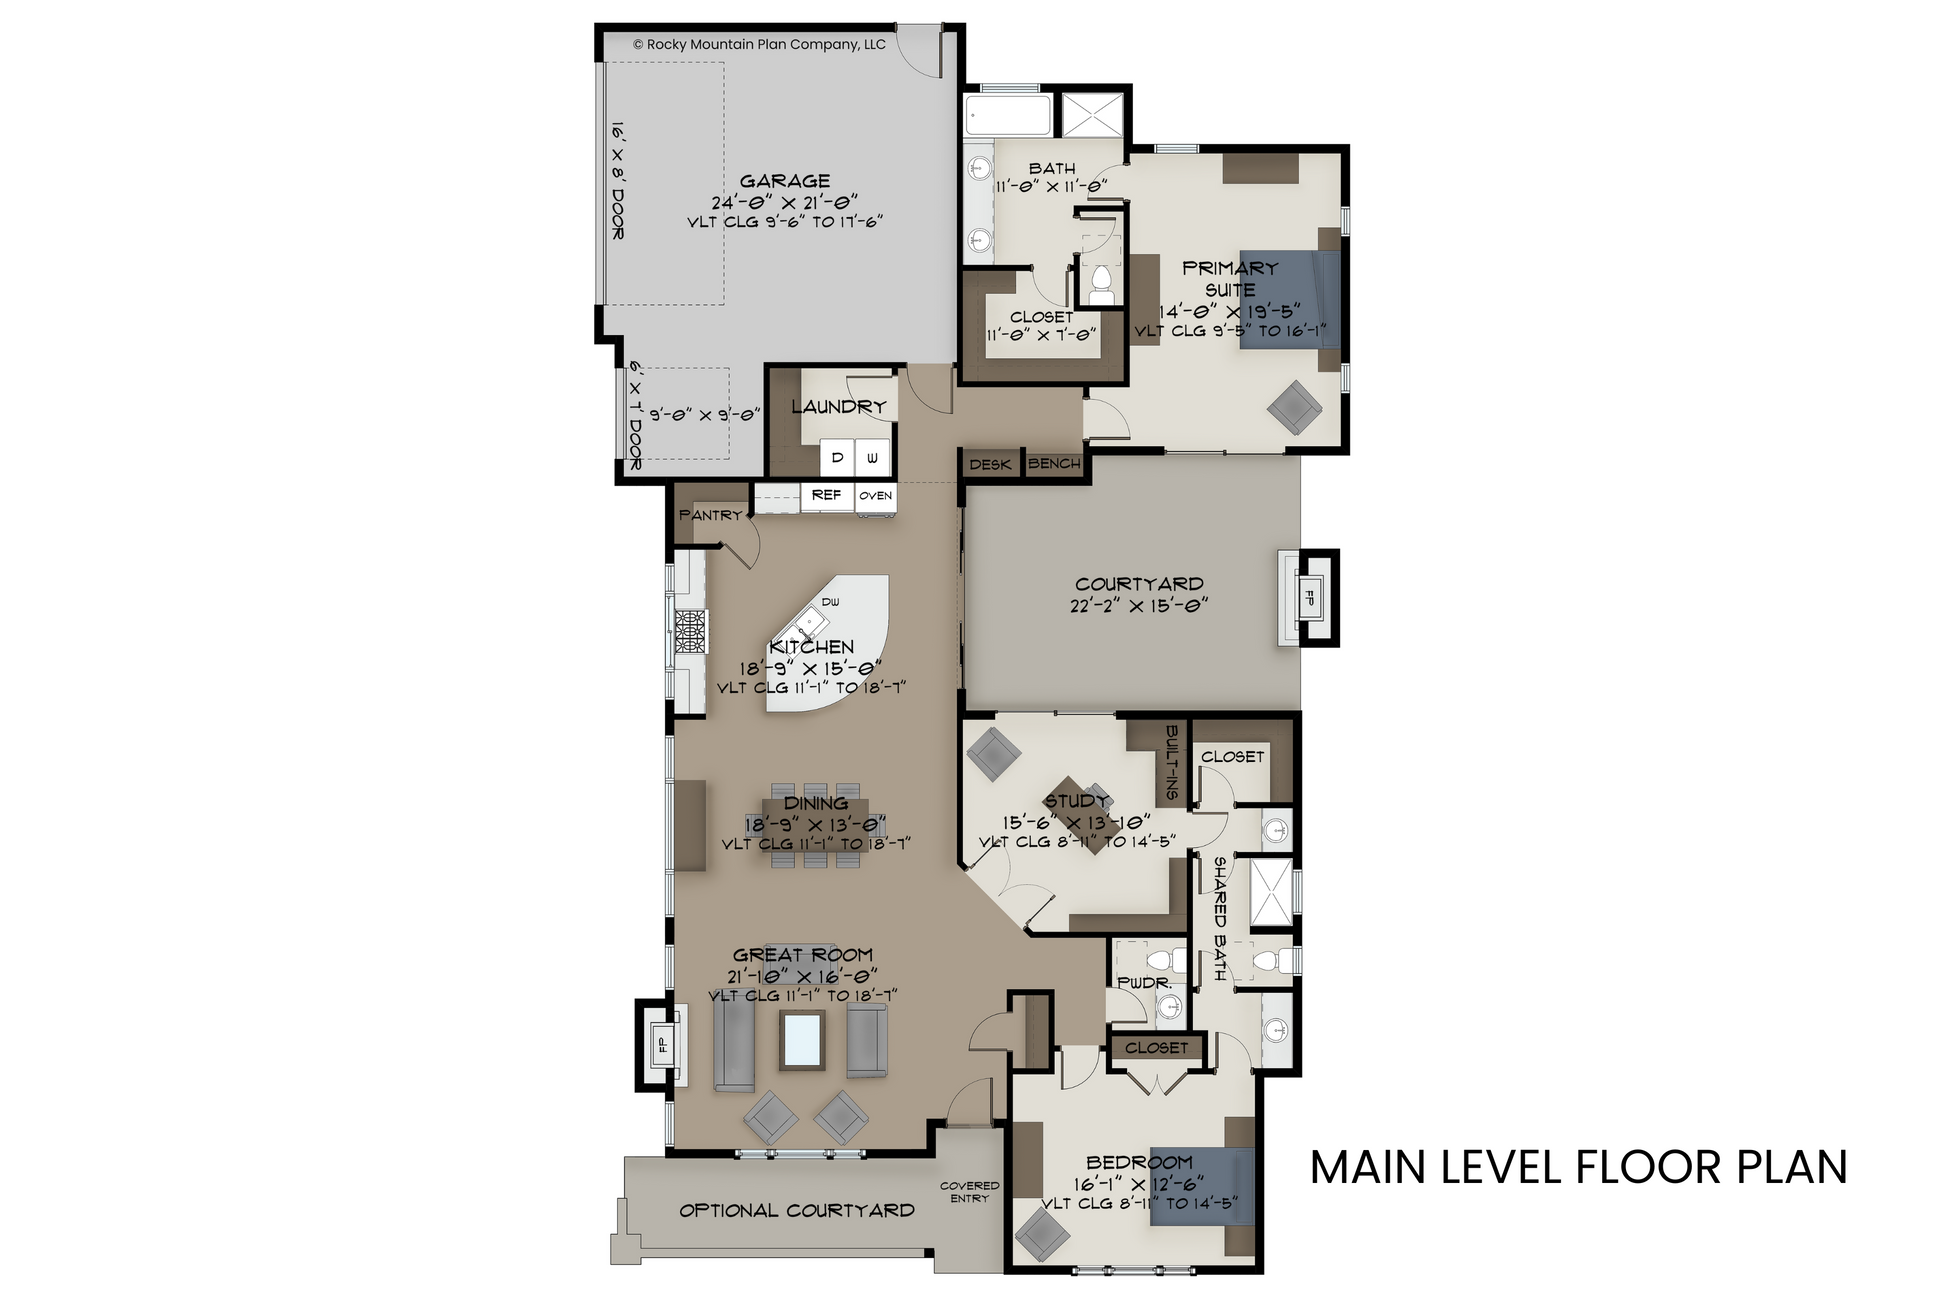 Modern-Courtyard-Ranch-Plan-Main-Level-Floor-Plan-Rocky-Mountain-Plan-Company-Dawn-Redwood